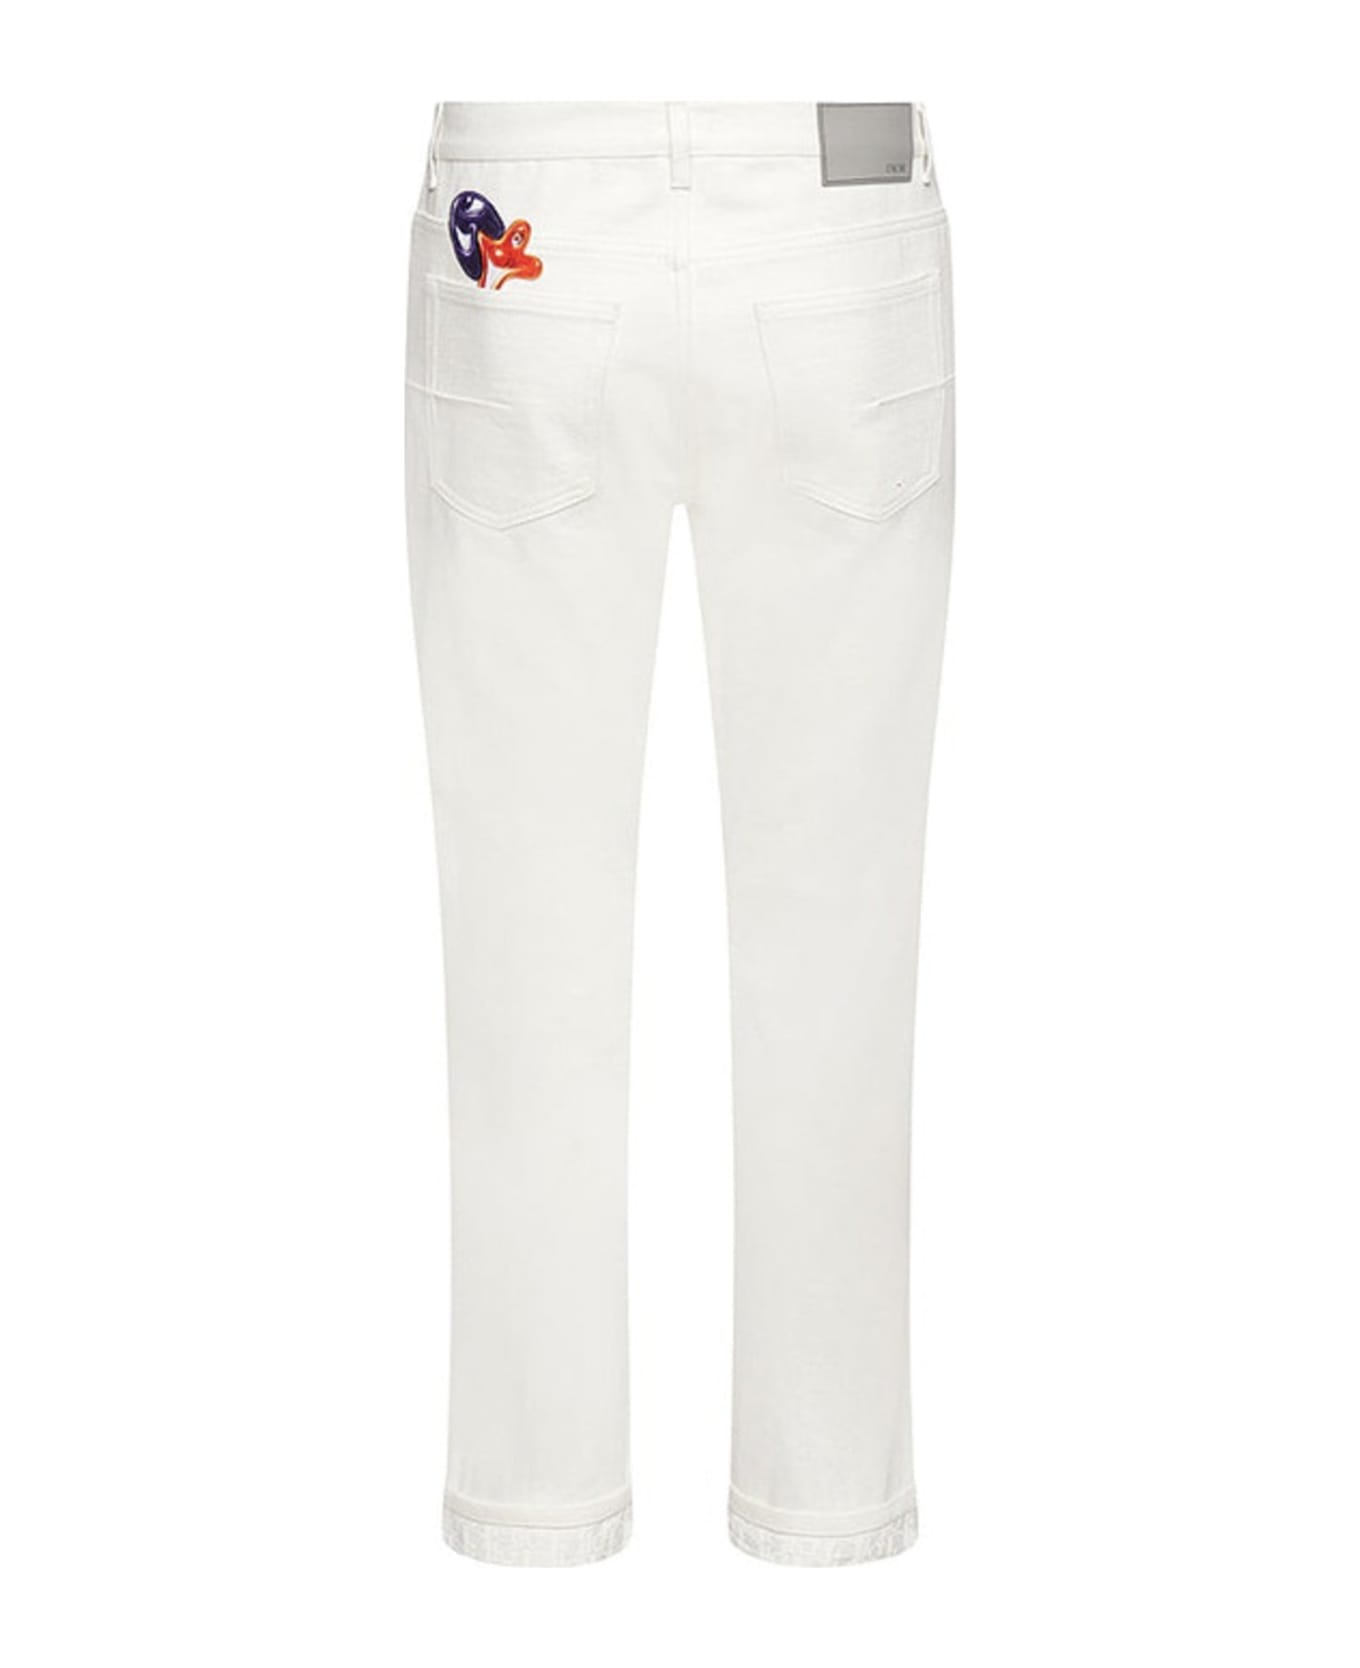 Dior Kennyscharf Patches Jeans - White